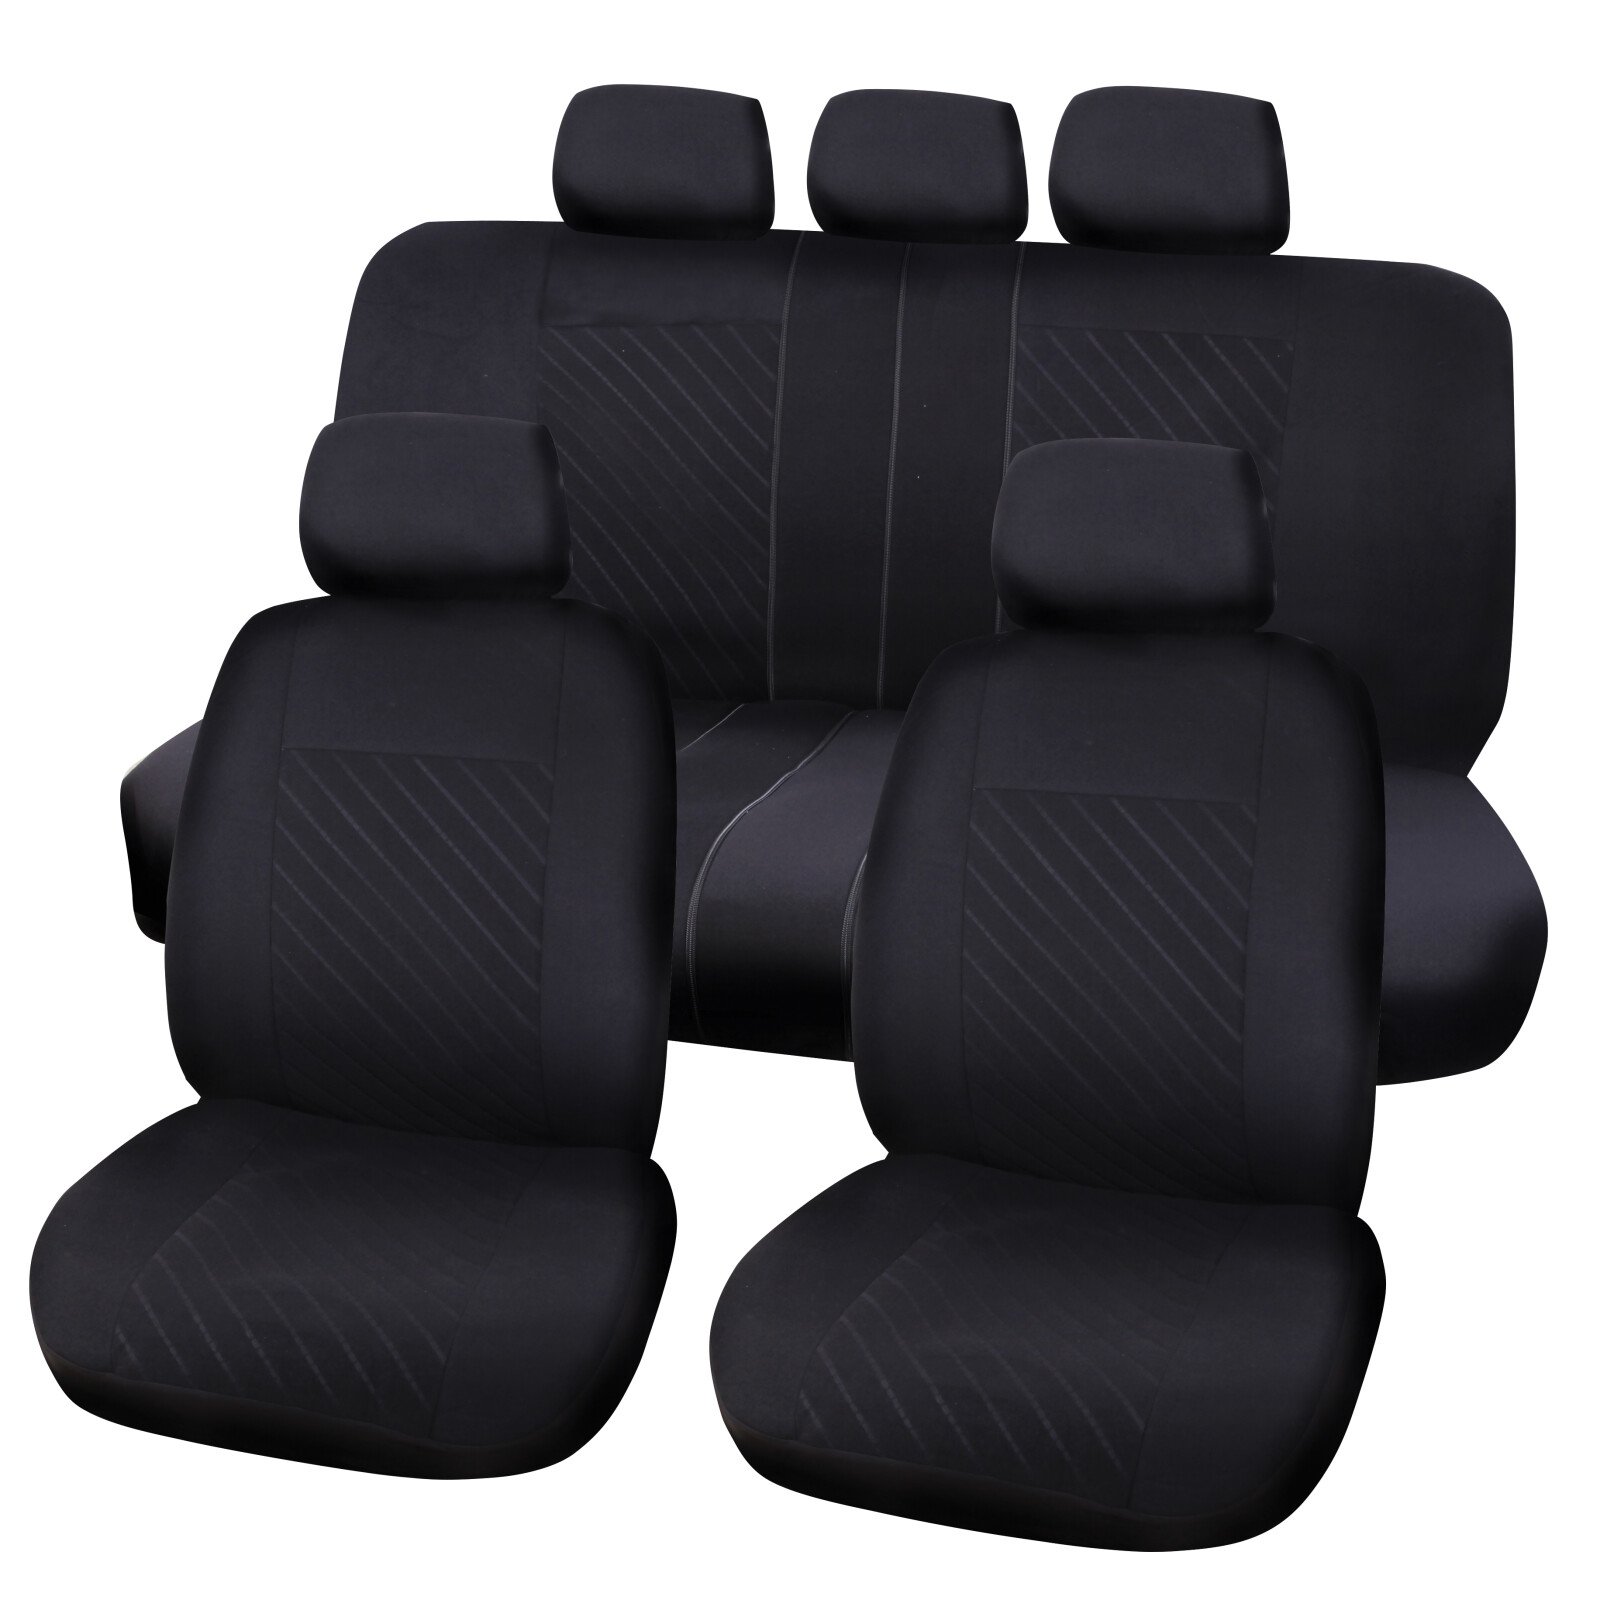 Berlin seat covers 9pcs - Black thumb